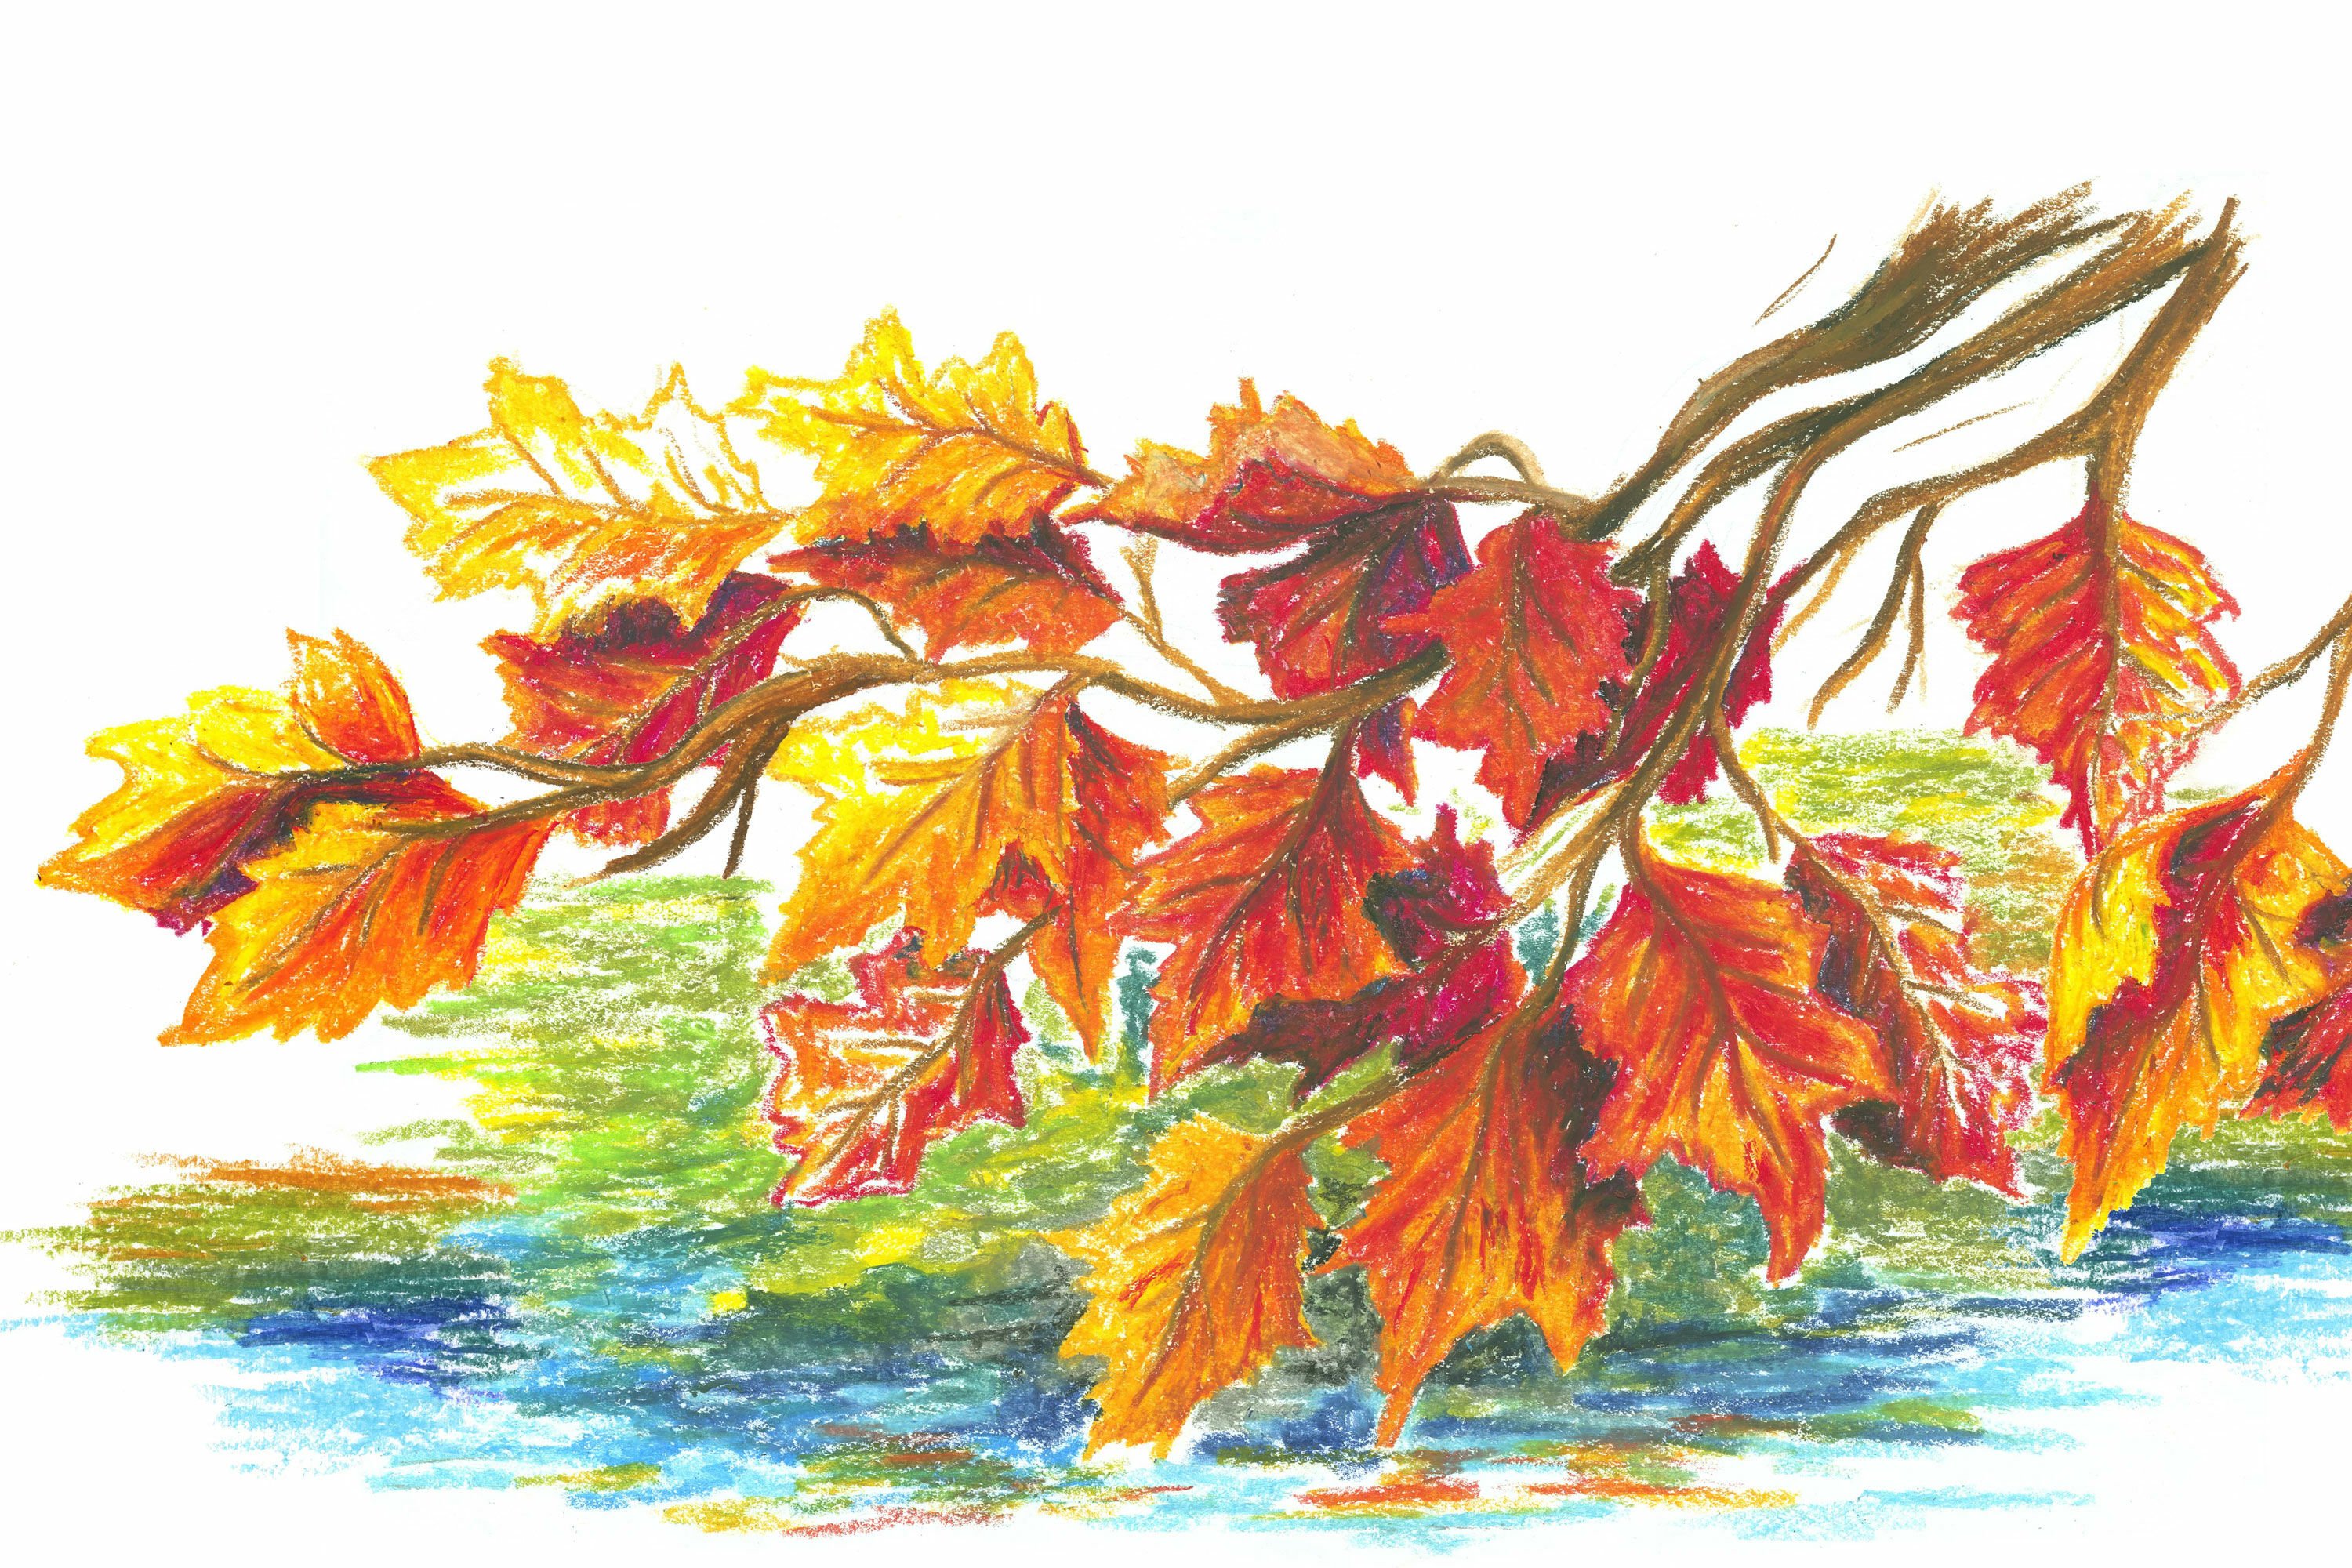 https://e.staedtlercdn.com/fileadmin/_processed_/4/2/csm_STAEDTLER_painting-autumn-leafs_Milieu_83276c1f46.jpg